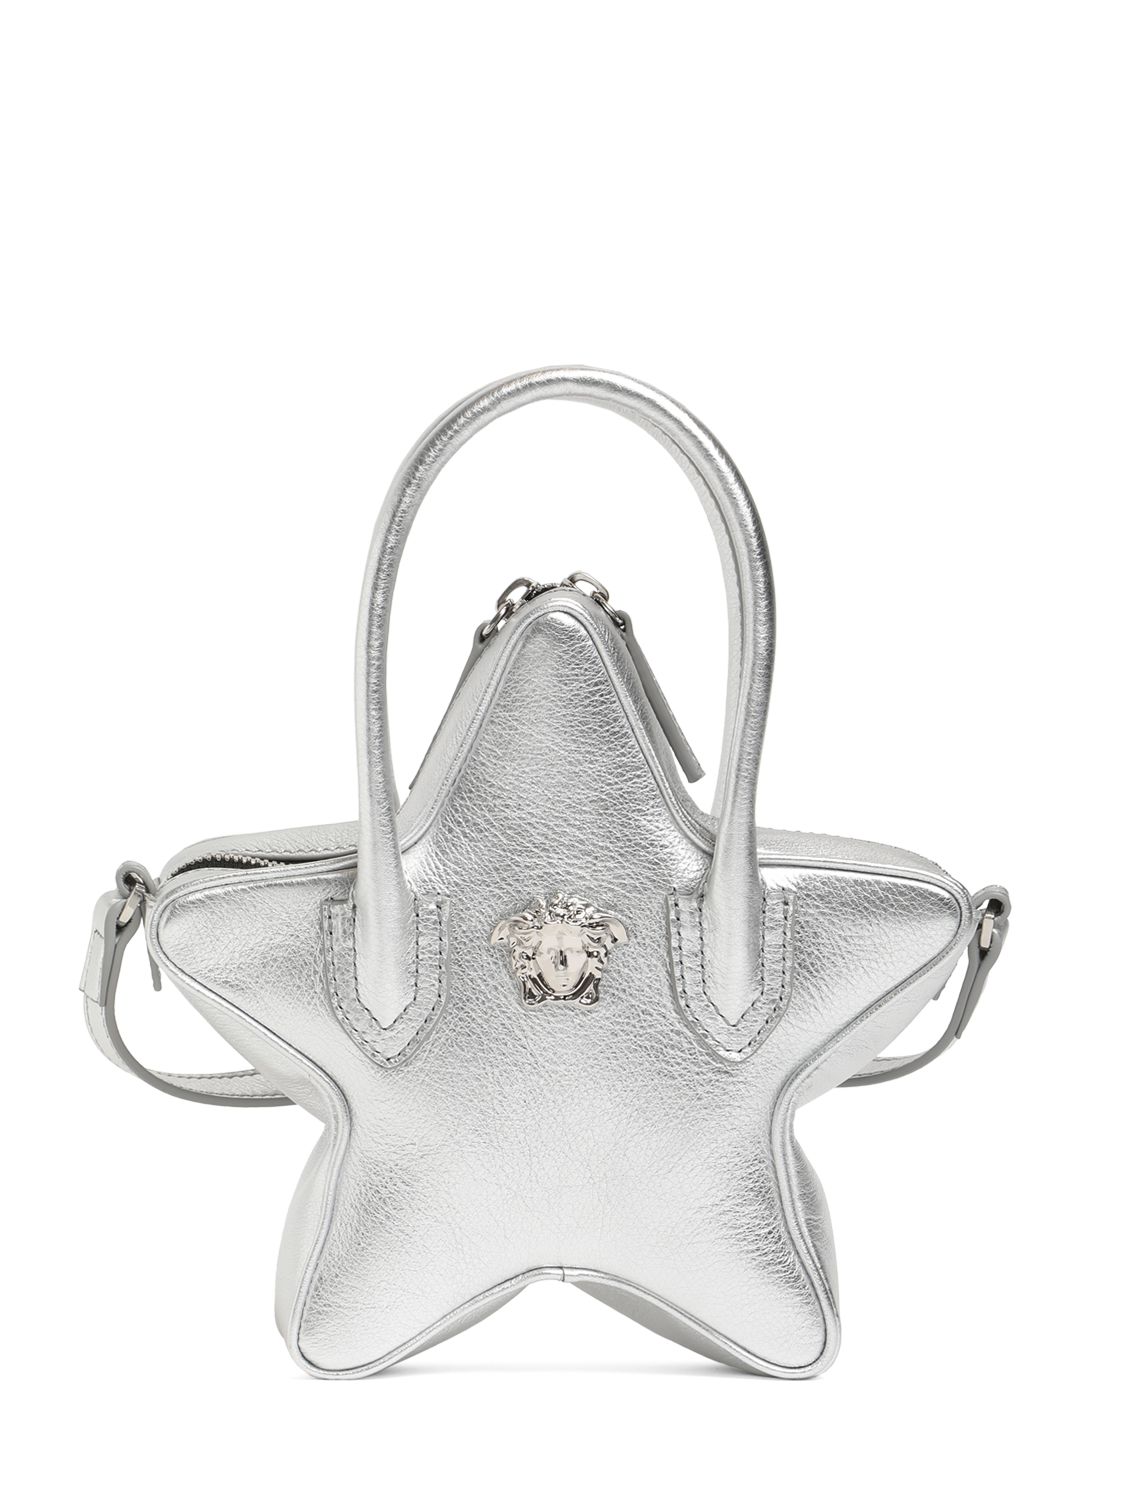 Image of Star Laminated Leather Handbag